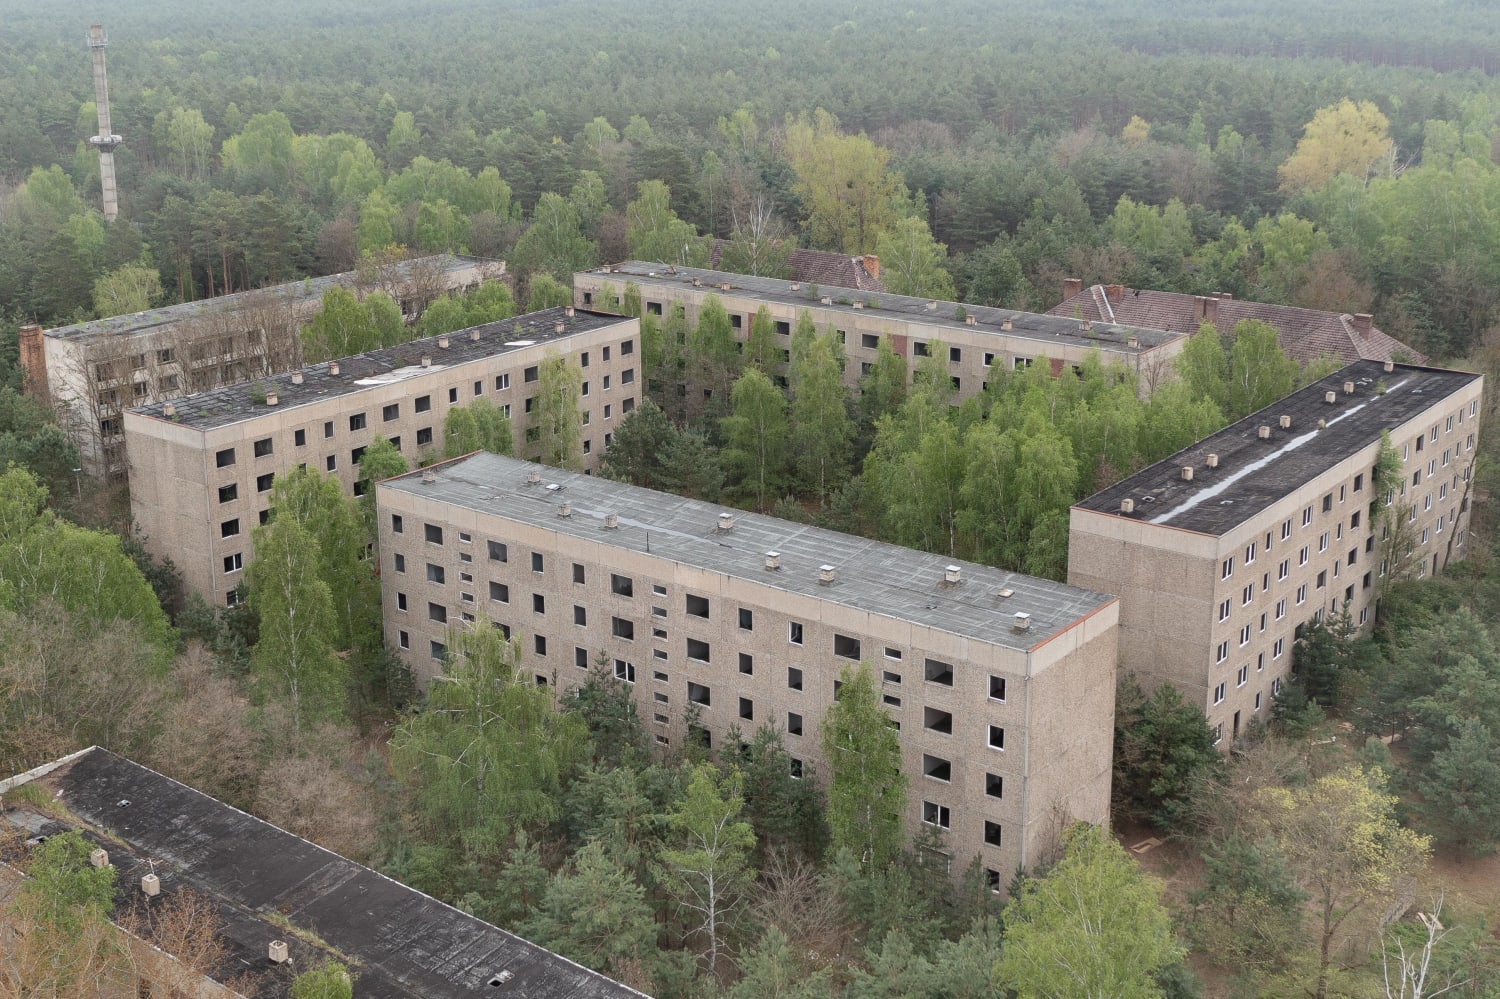 Soviet wasteland (abandoned military base in Eastern Germany)